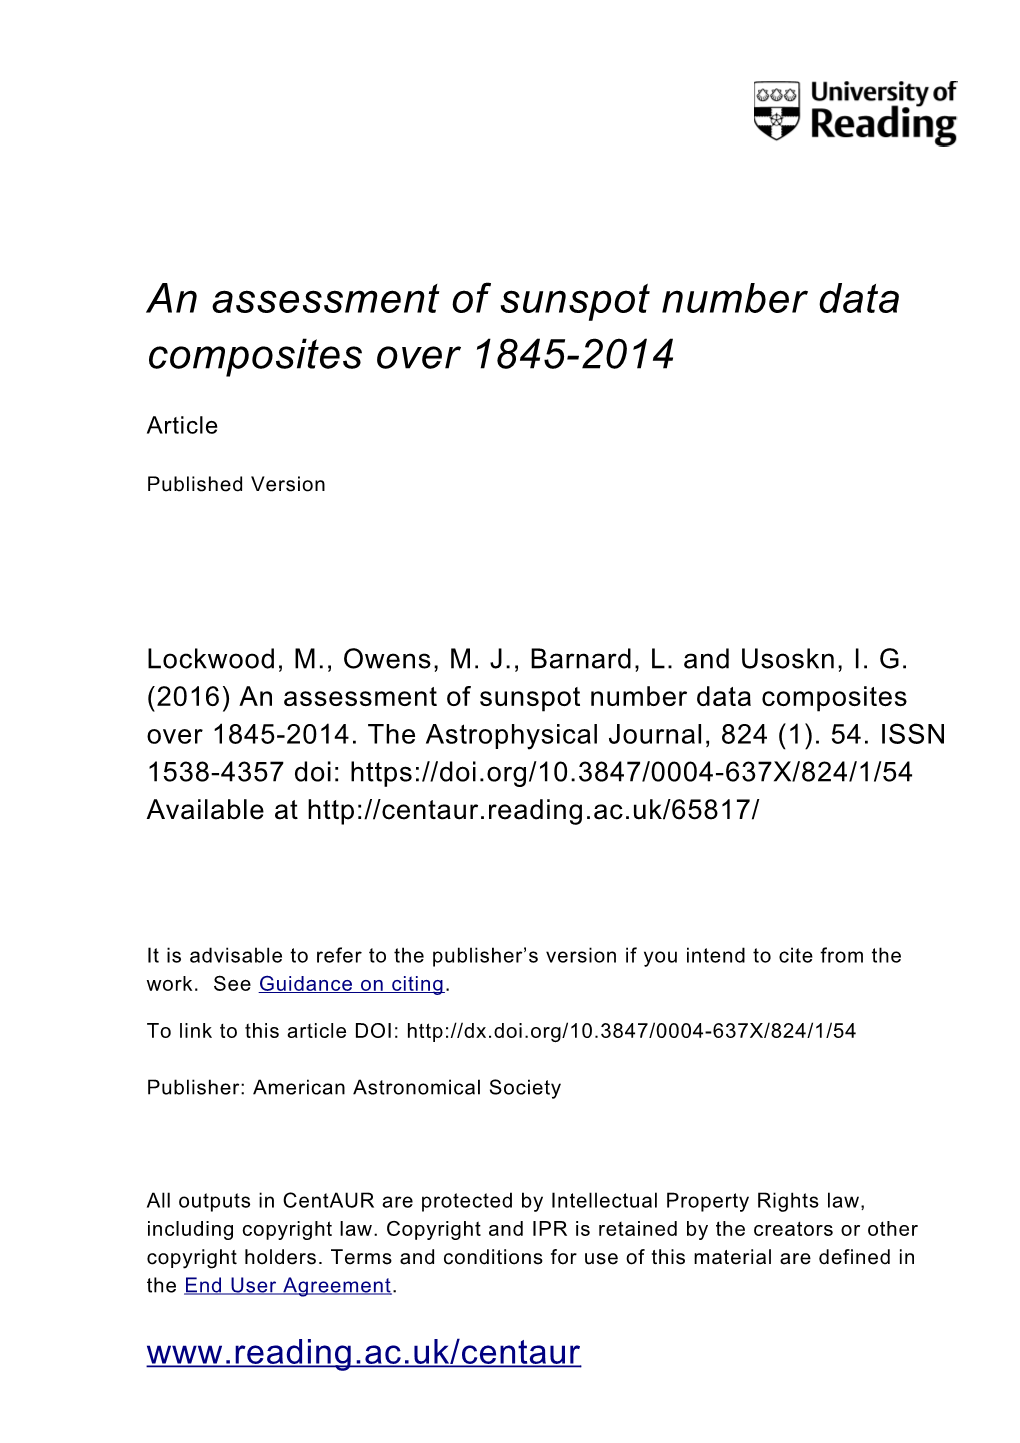 An Assessment of Sunspot Number Data Composites Over 1845-2014